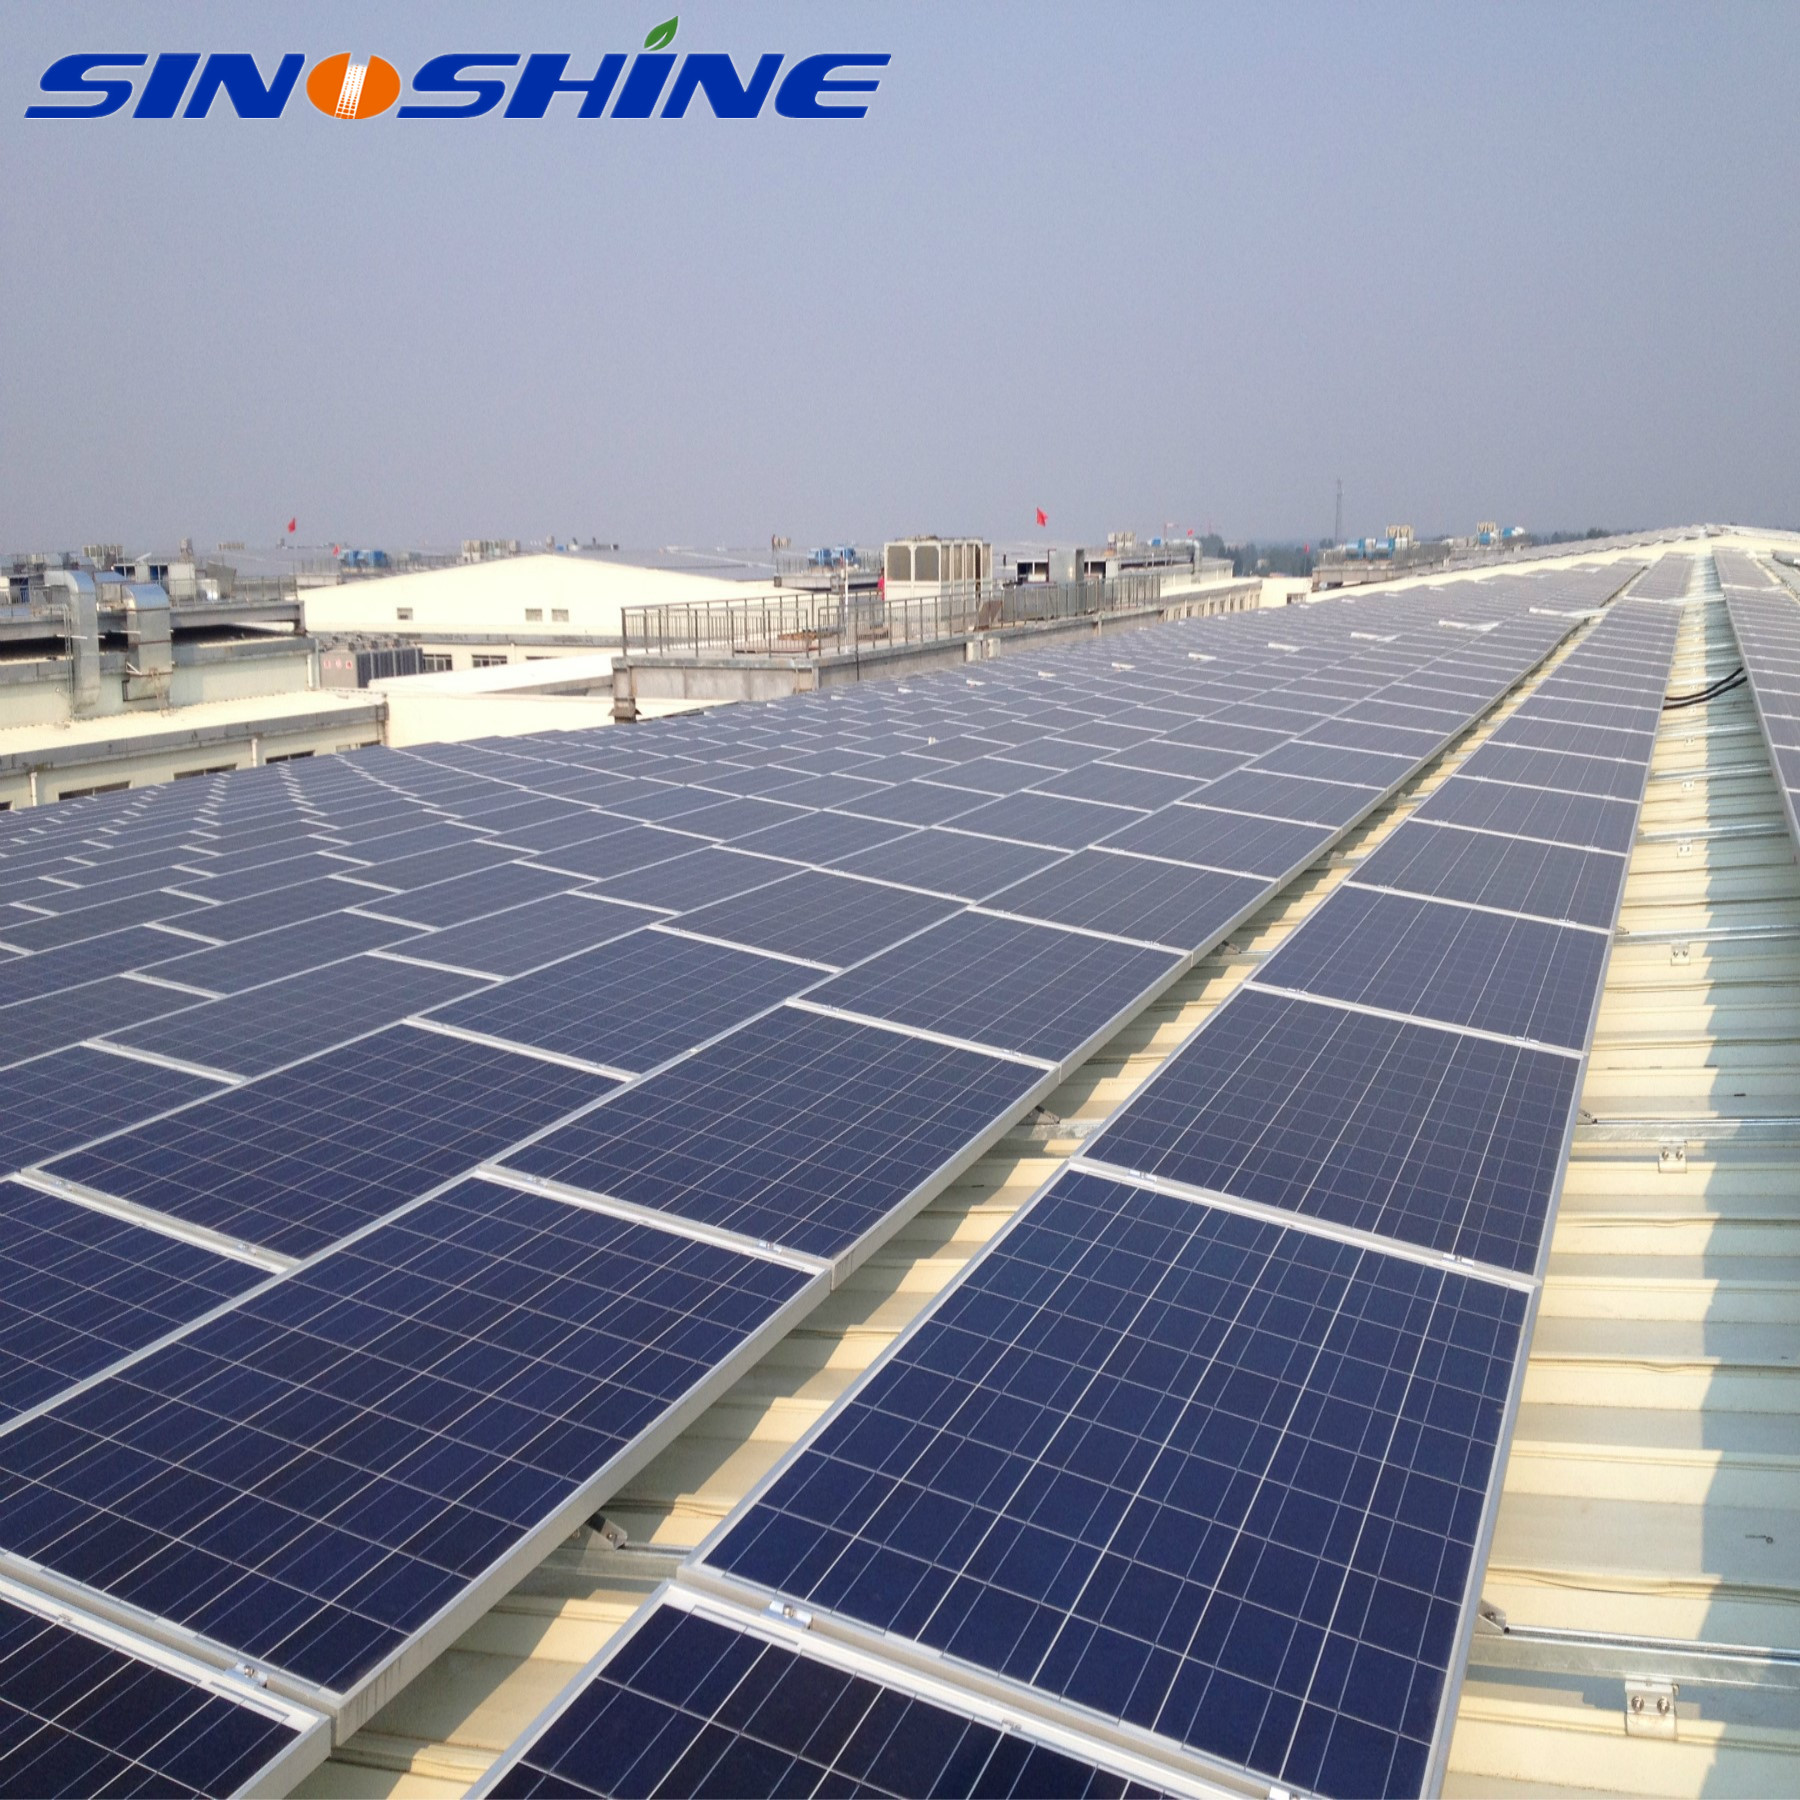 China 1kw 5kw 25kw 150kw 10000 watt solar panel system price in india wholesale